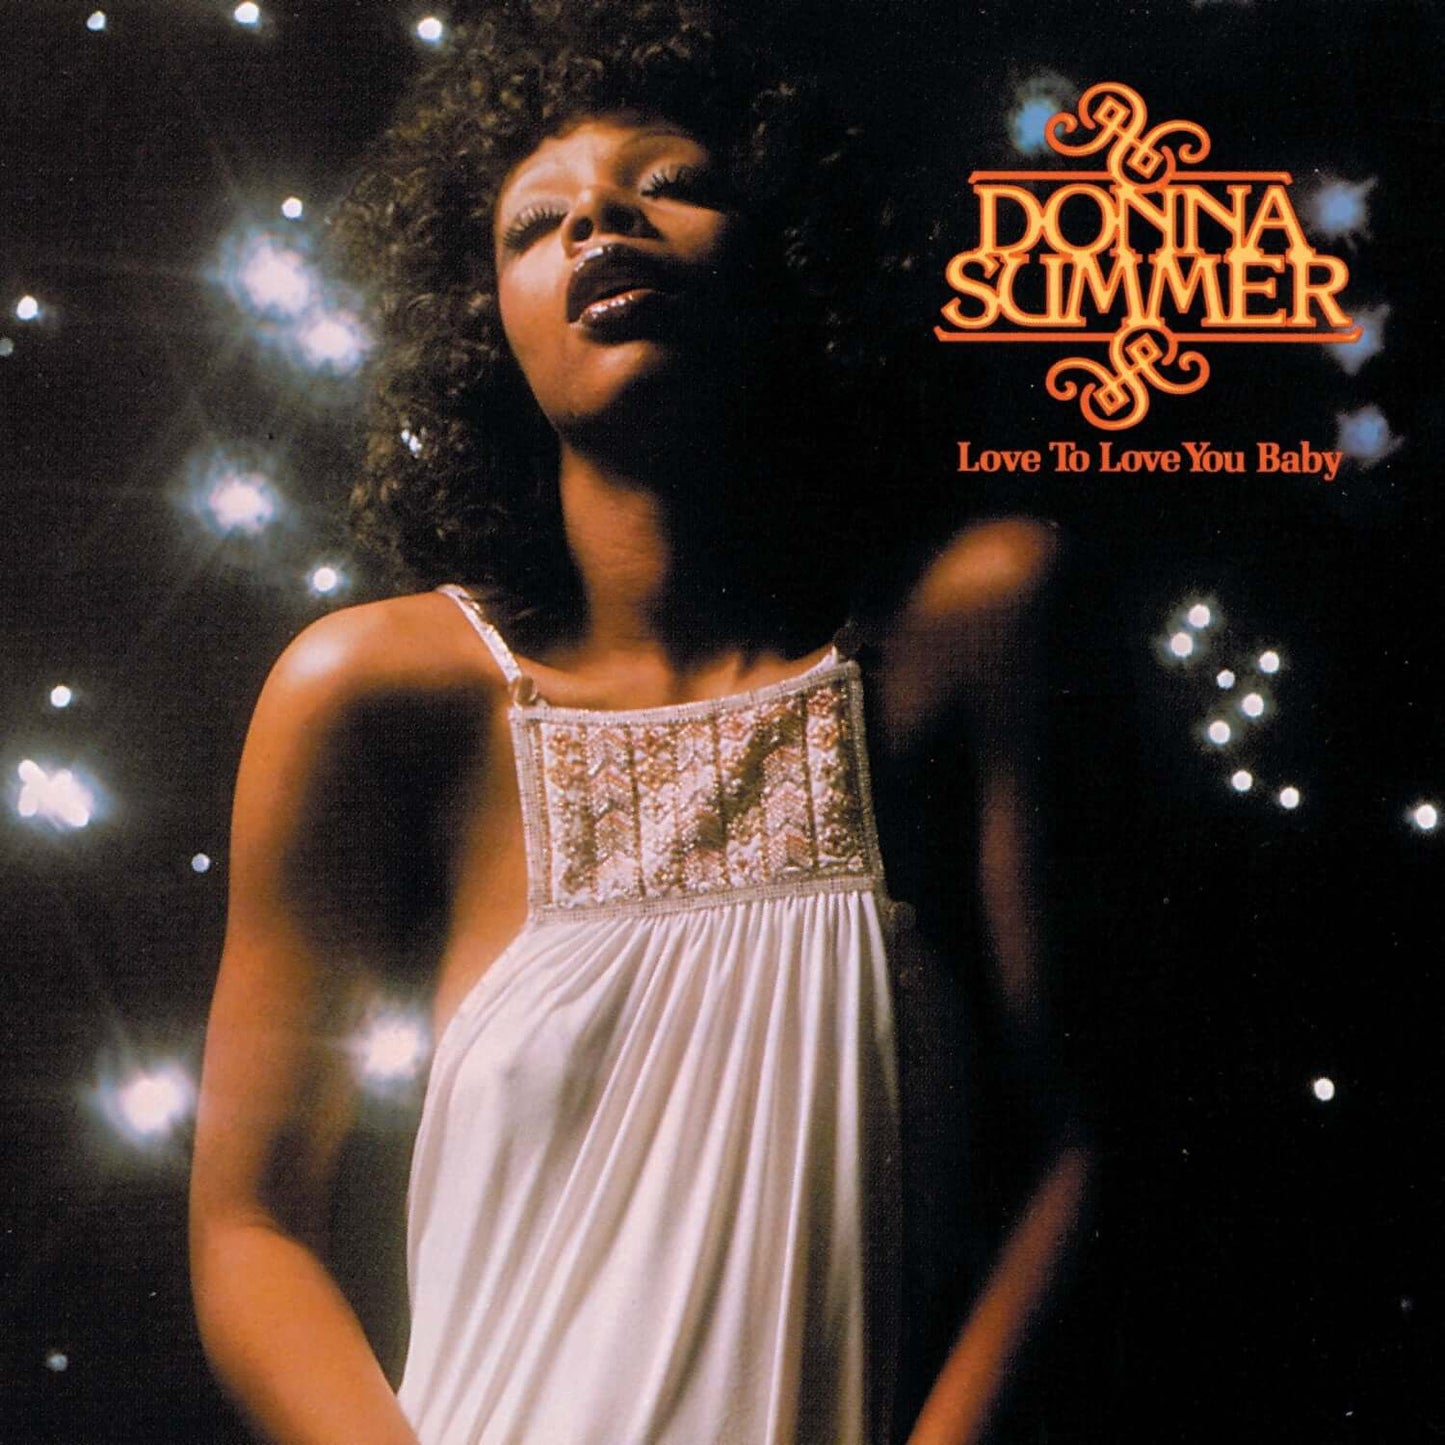 Donna Summer - Love To Love You Baby (Studio Acapella)